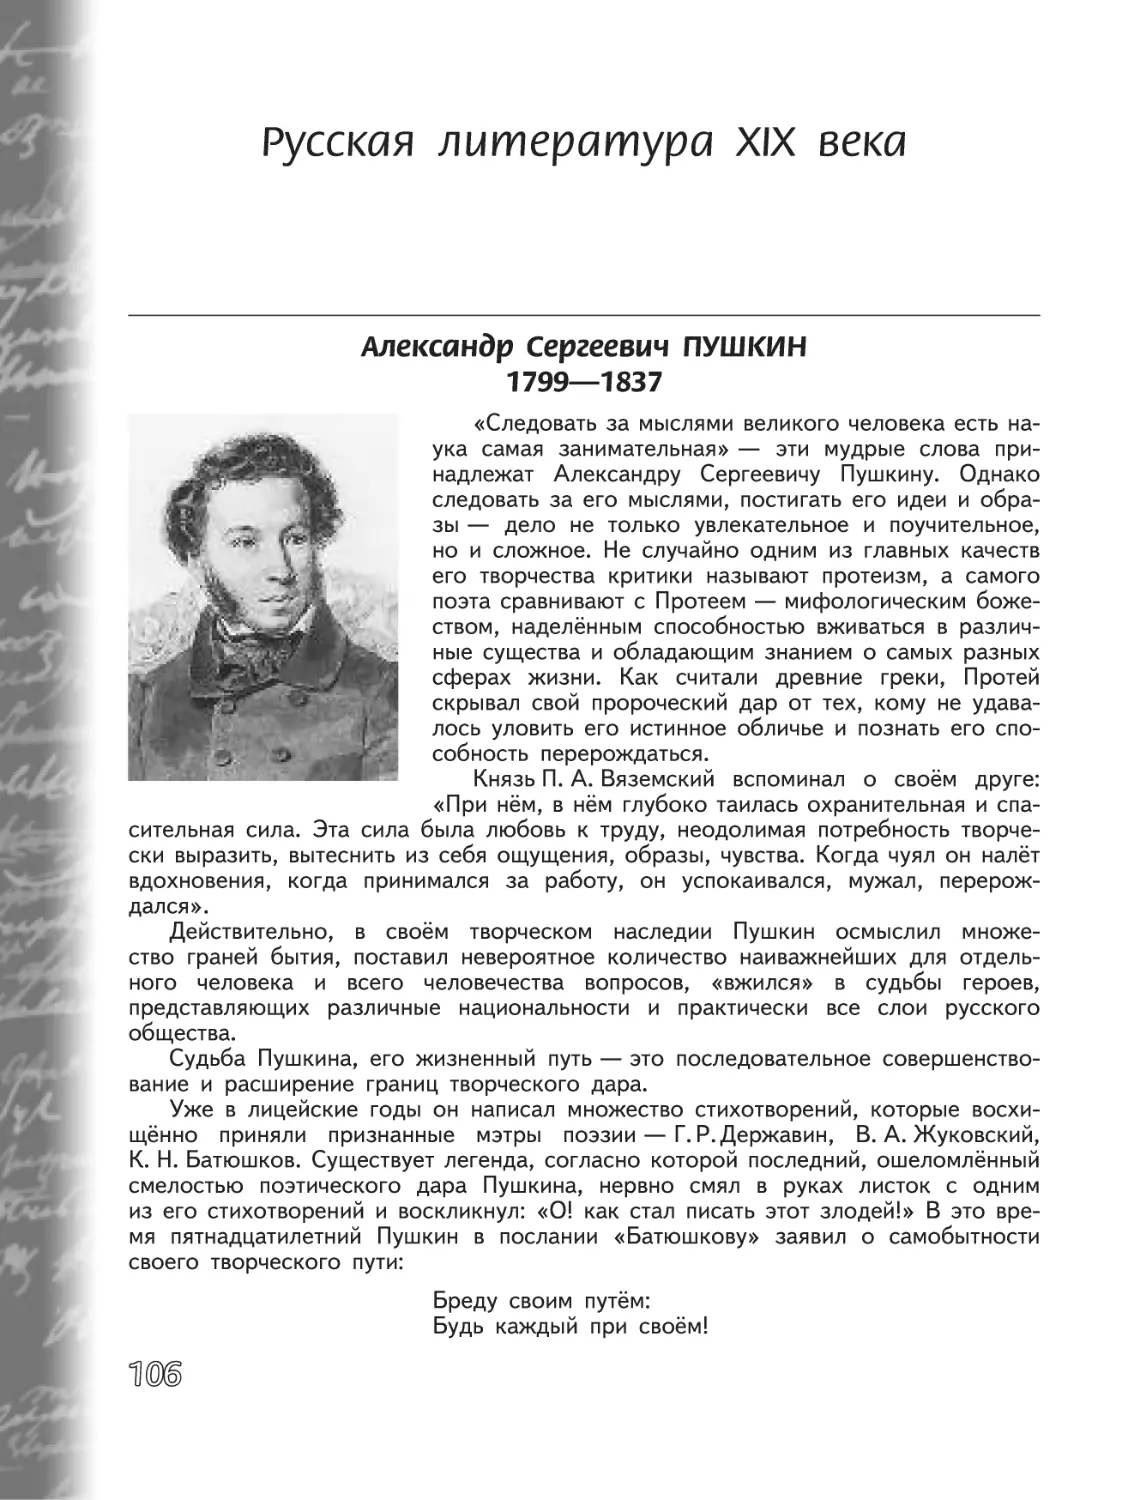 Русская литература XIX века
А. С. Пушкин